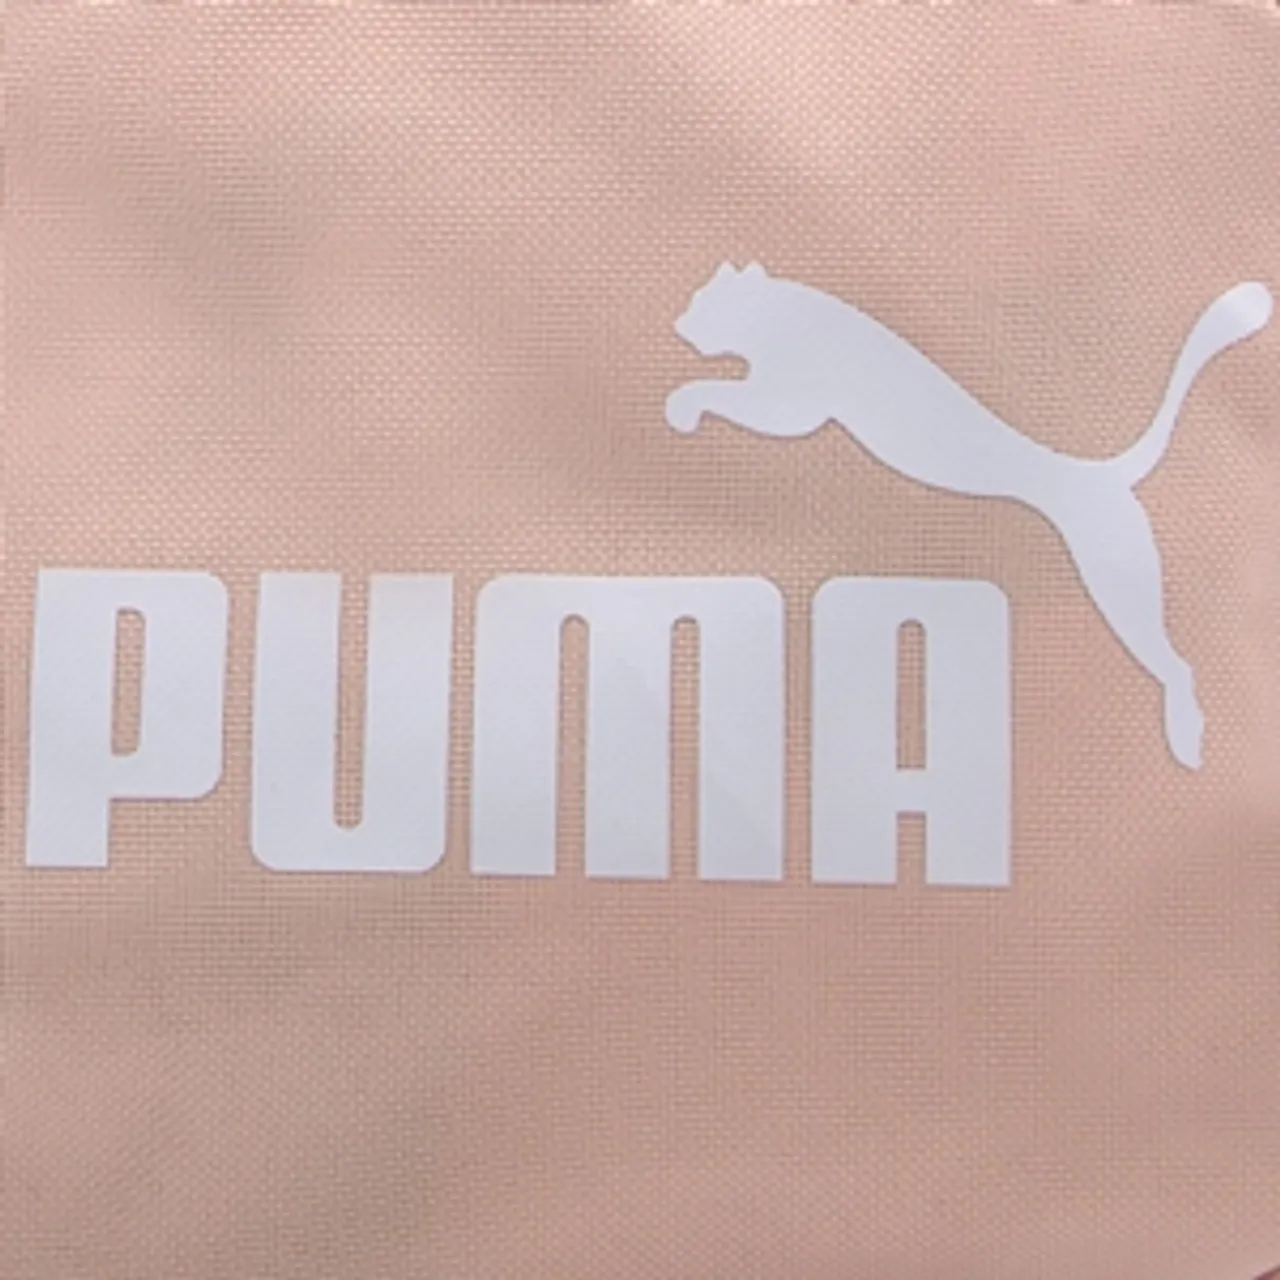 Puma Phase Waist Bag heuptas